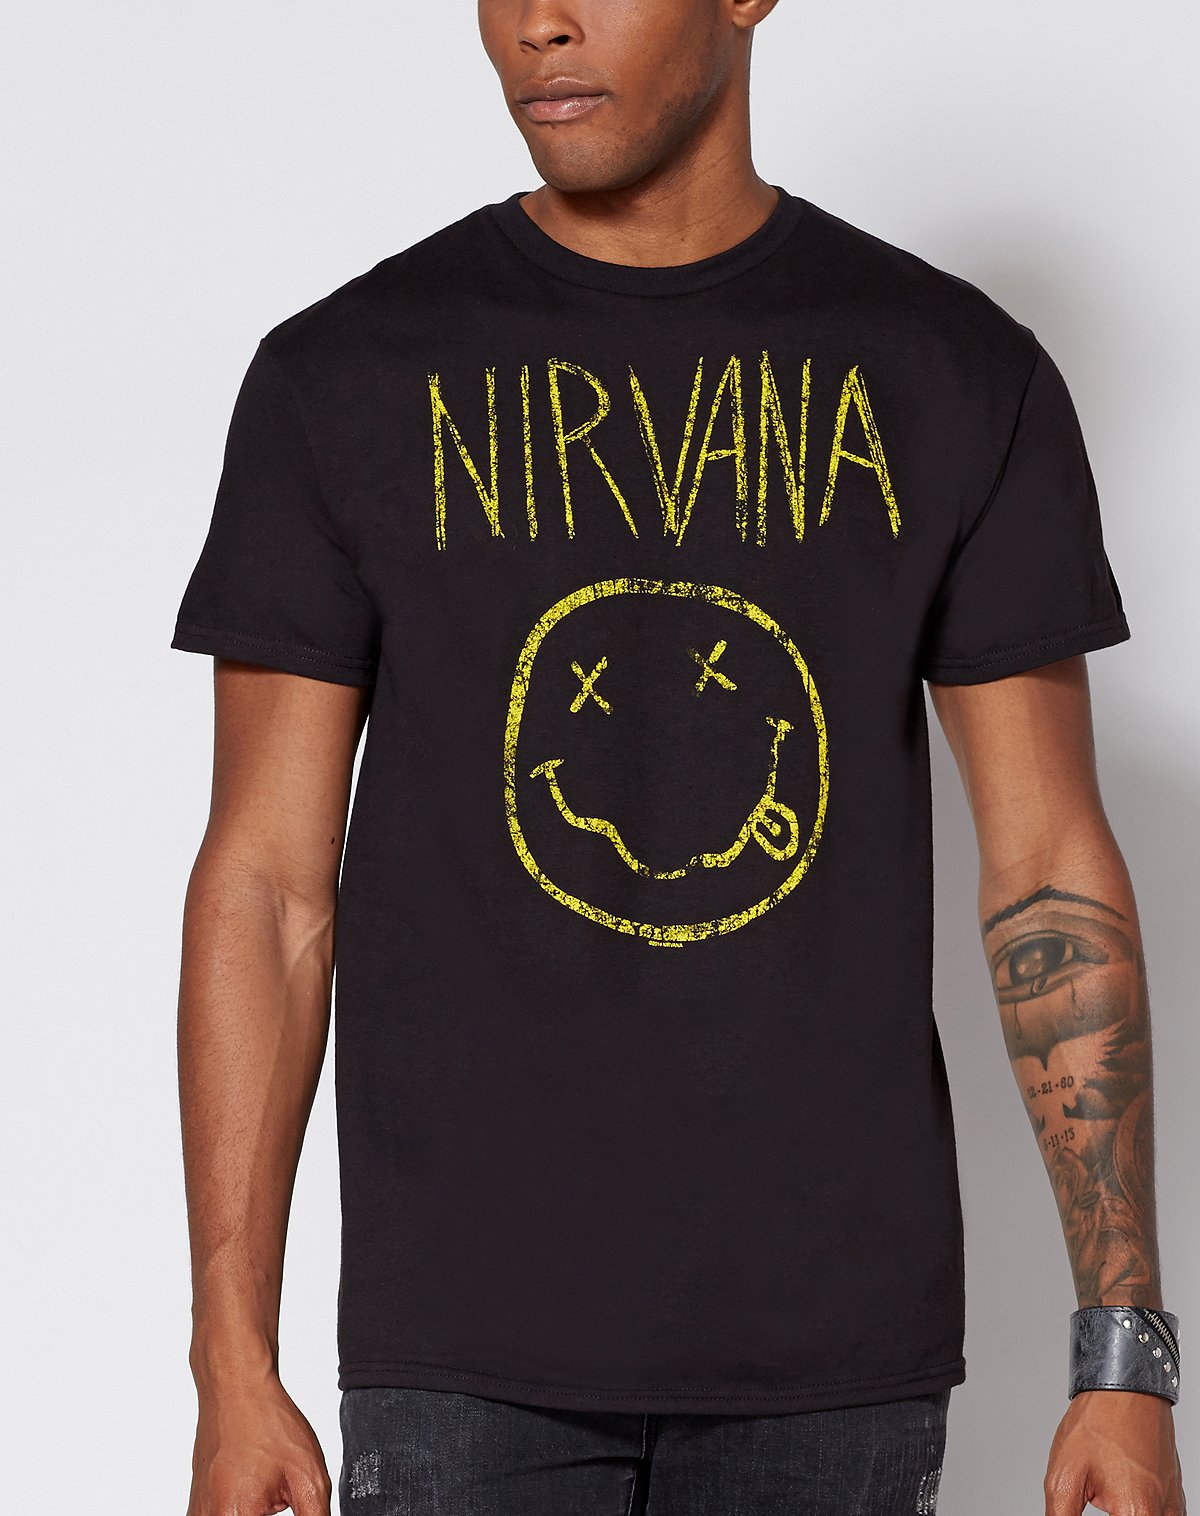 Smiley Unisexe T-Shirt Noir, Nirvana Metal-Kids